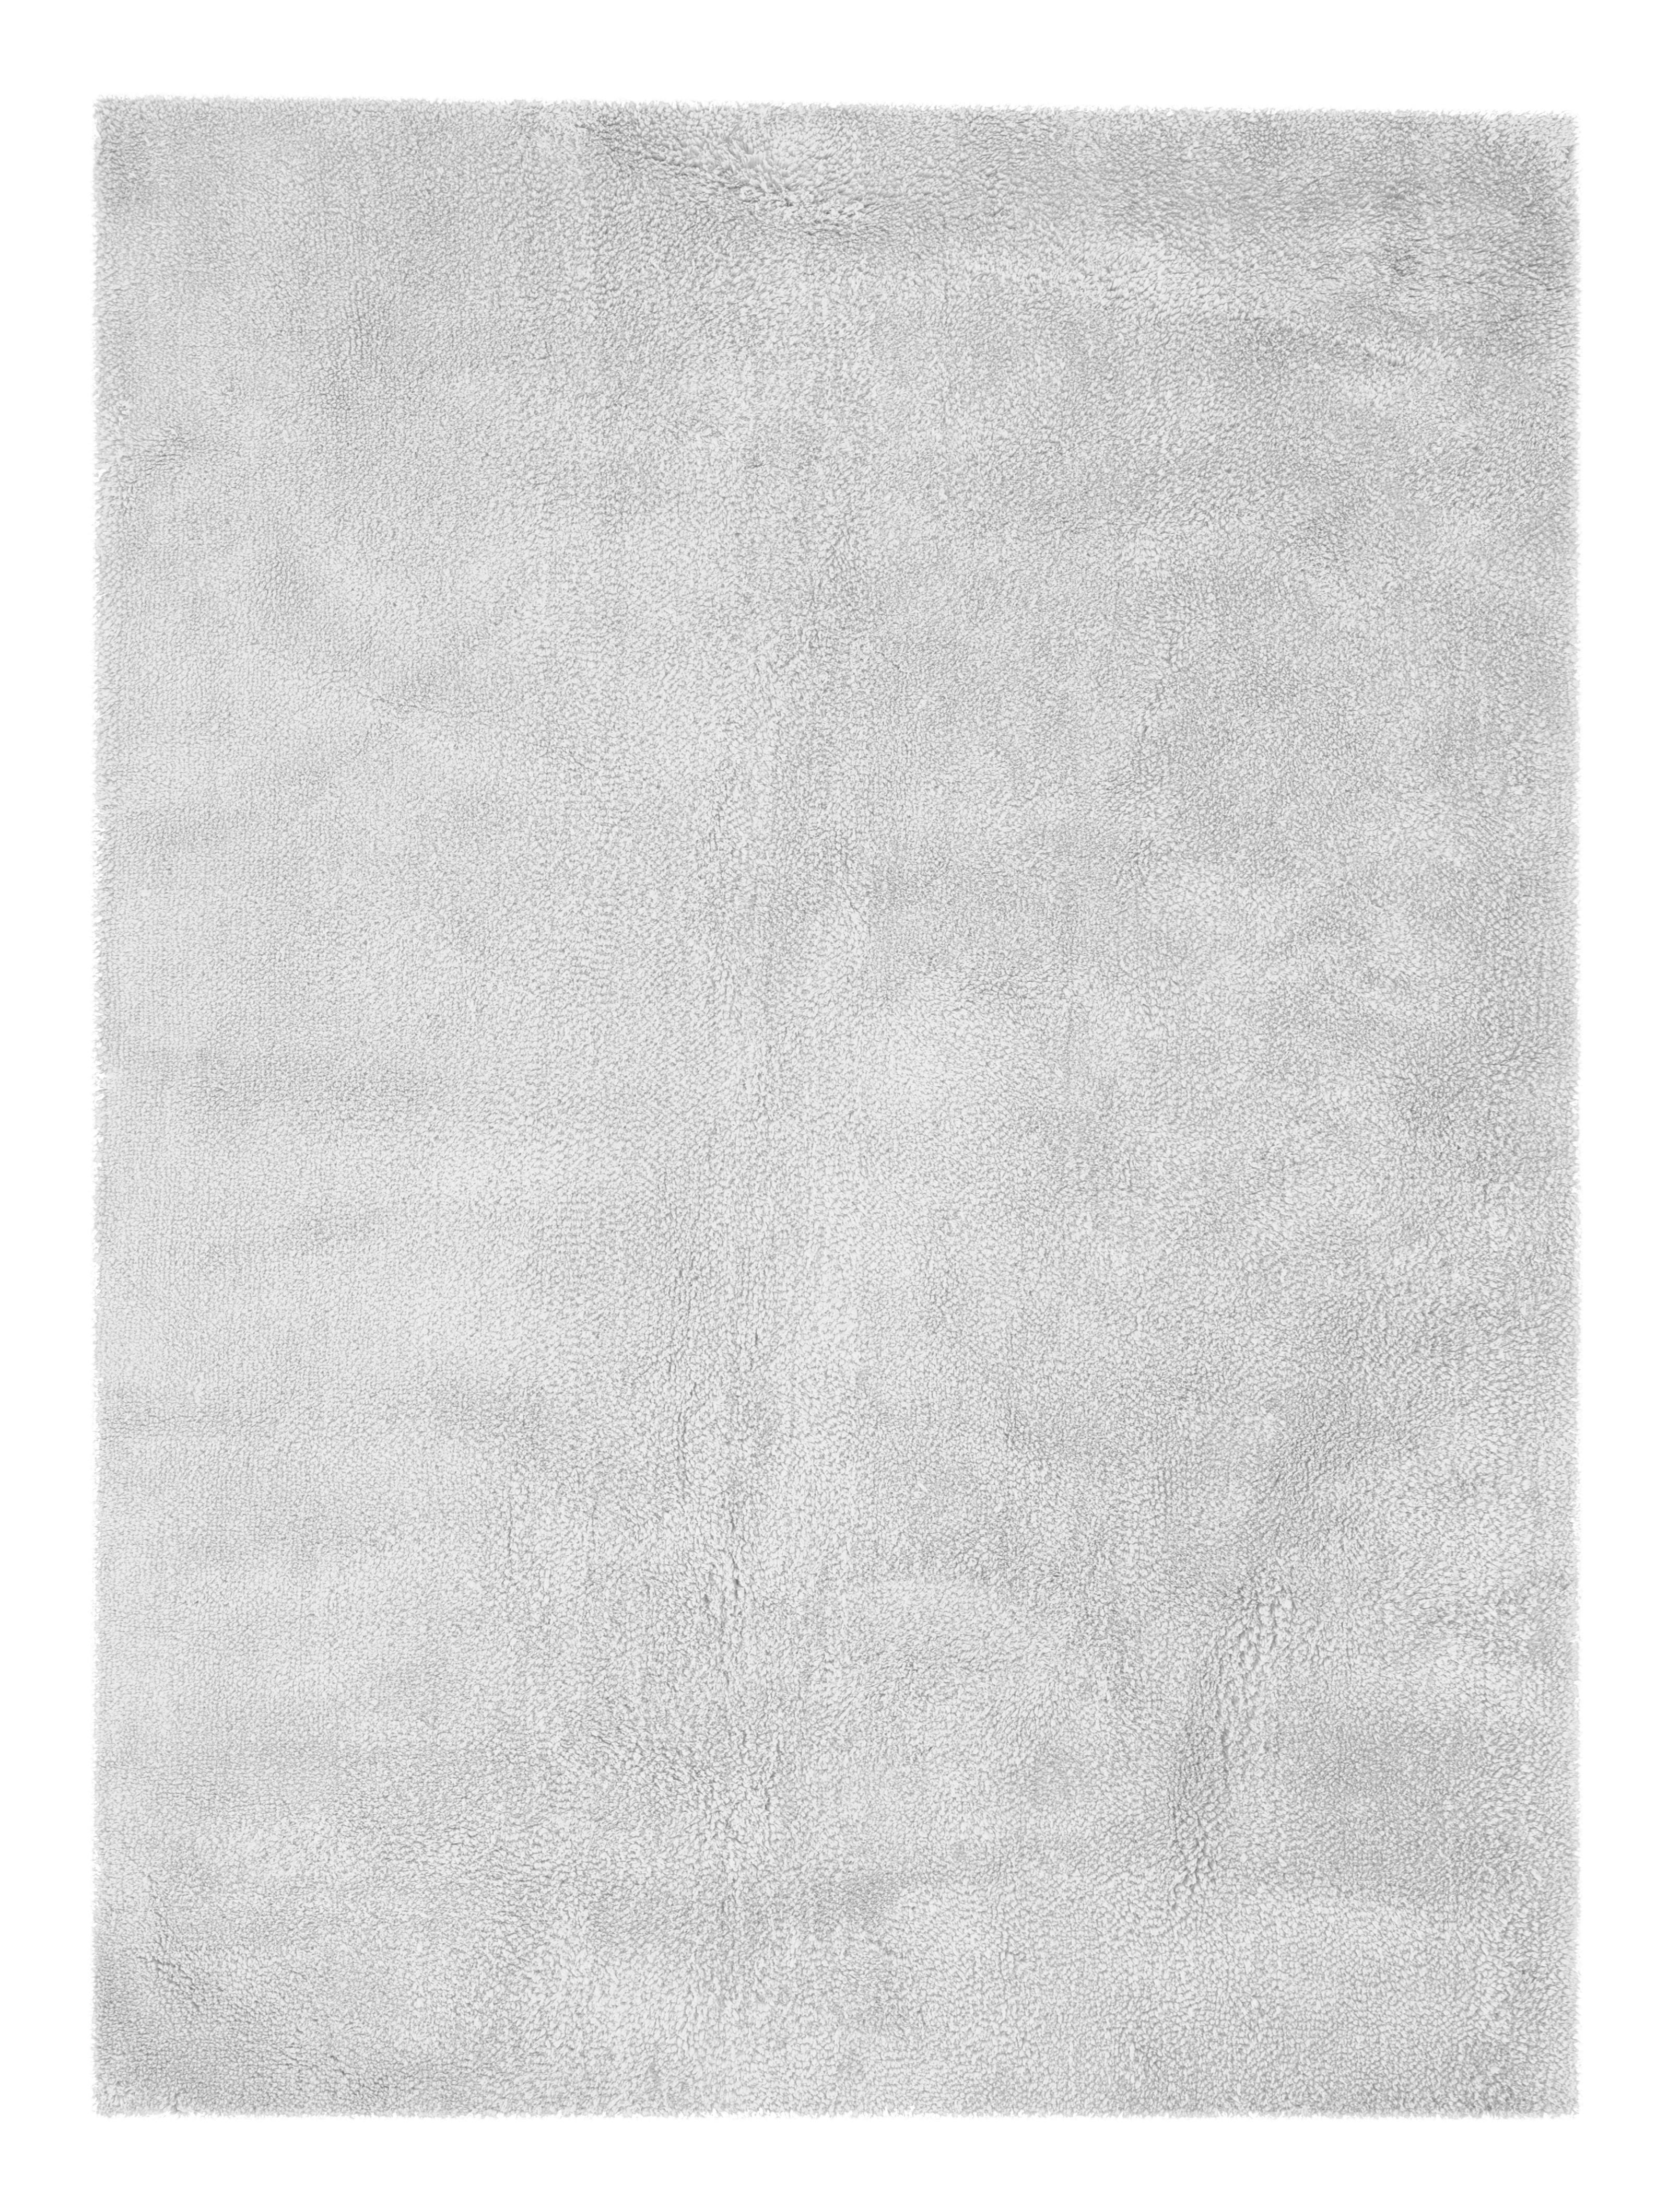 HOCHFLORTEPPICH  120/170 cm   Grau   - Grau, Design, Textil (120/170cm)